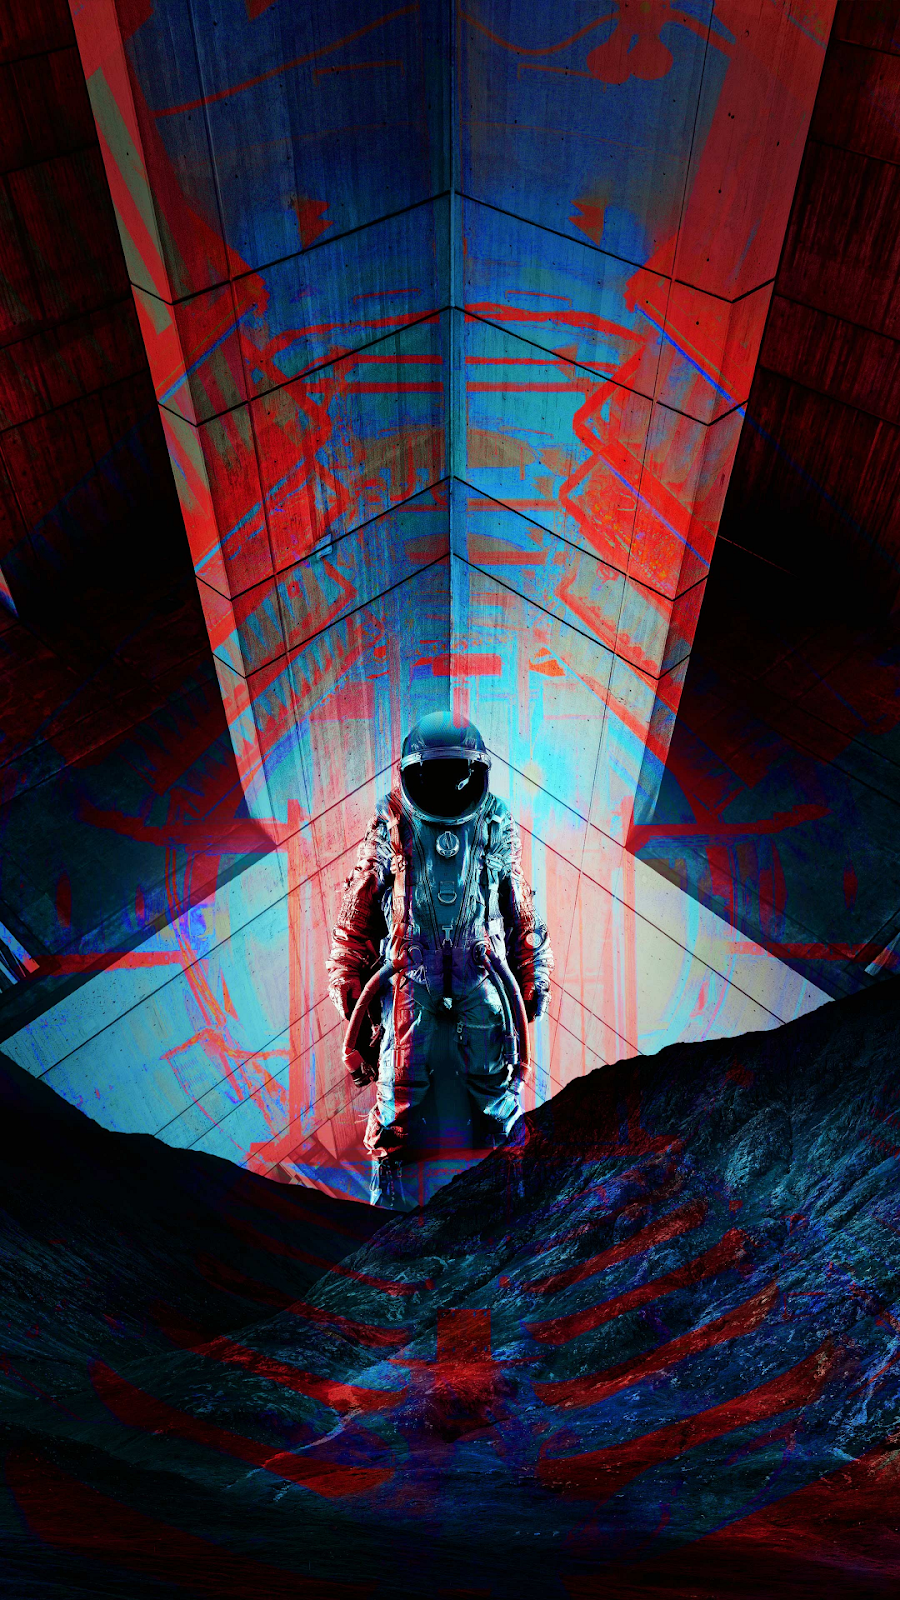 Astronaut wallpaper for phone